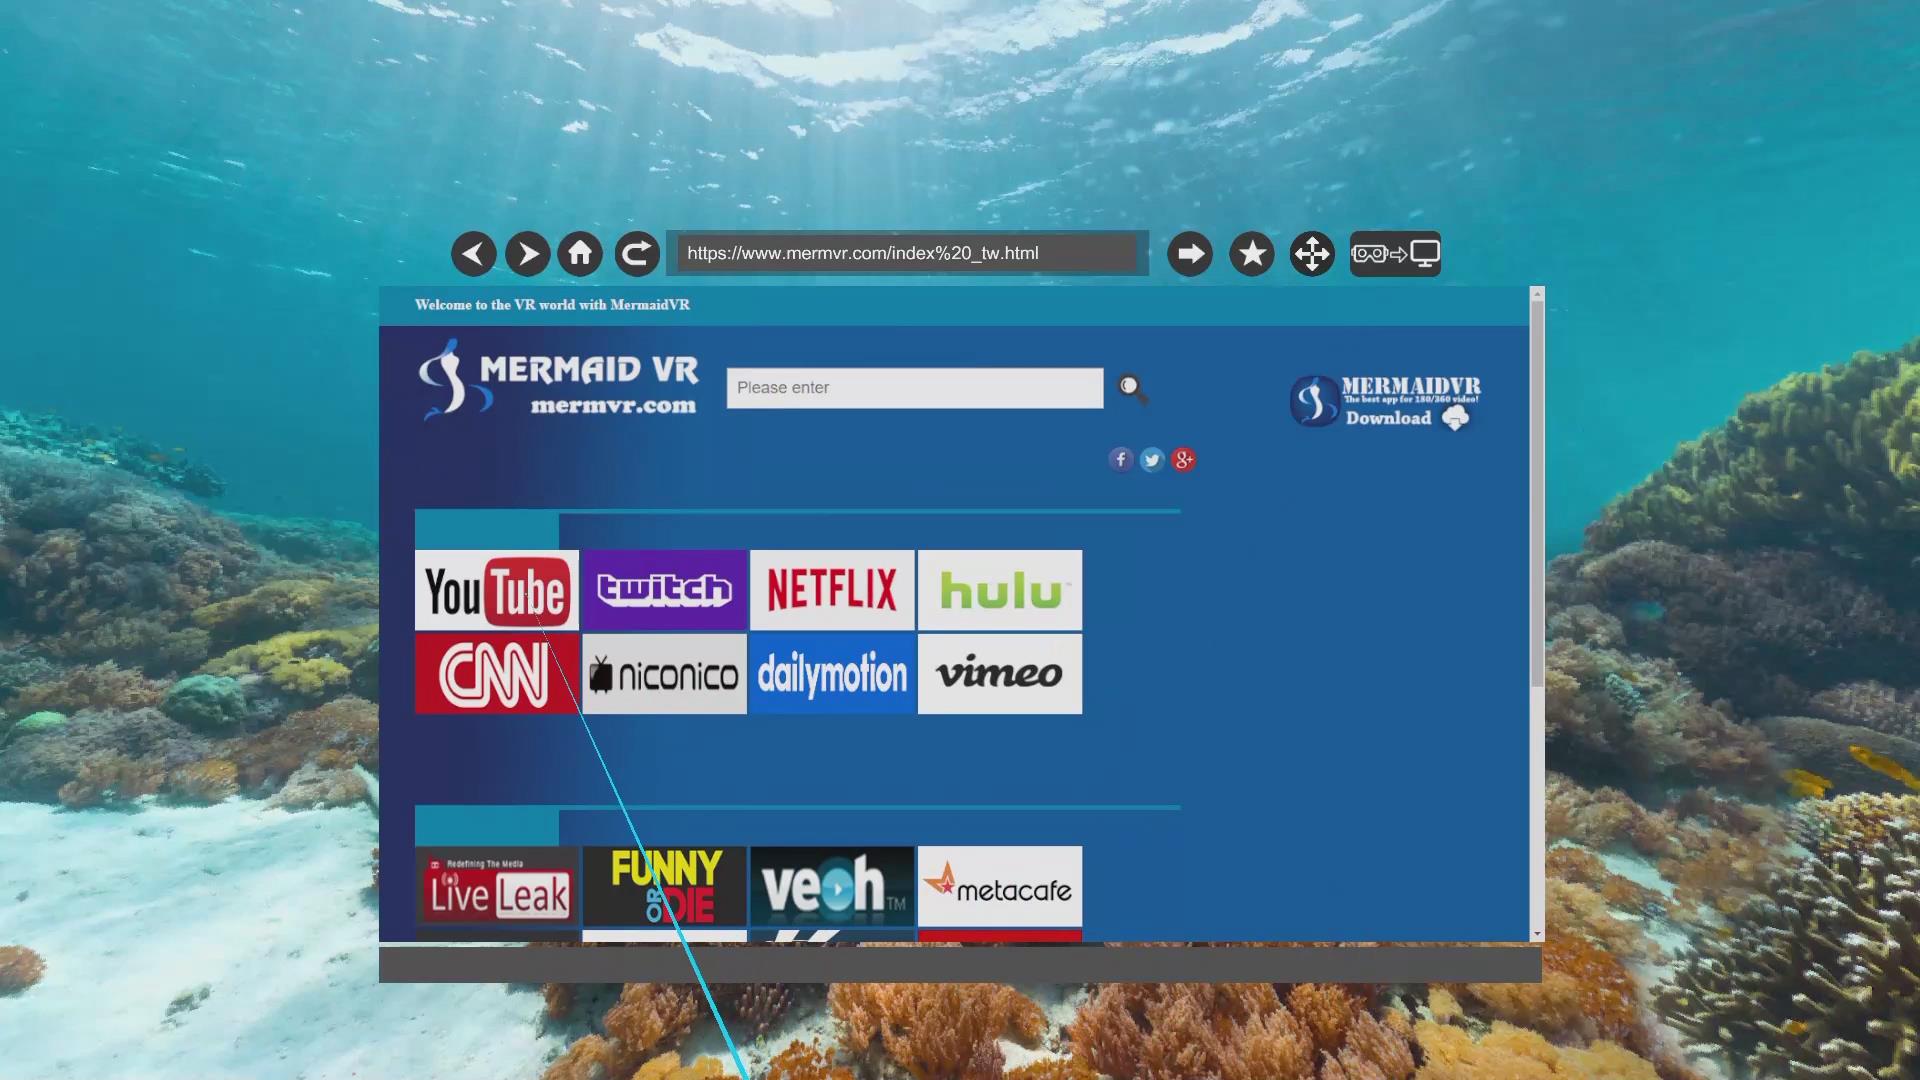 MermaidVR Video Player on Steam